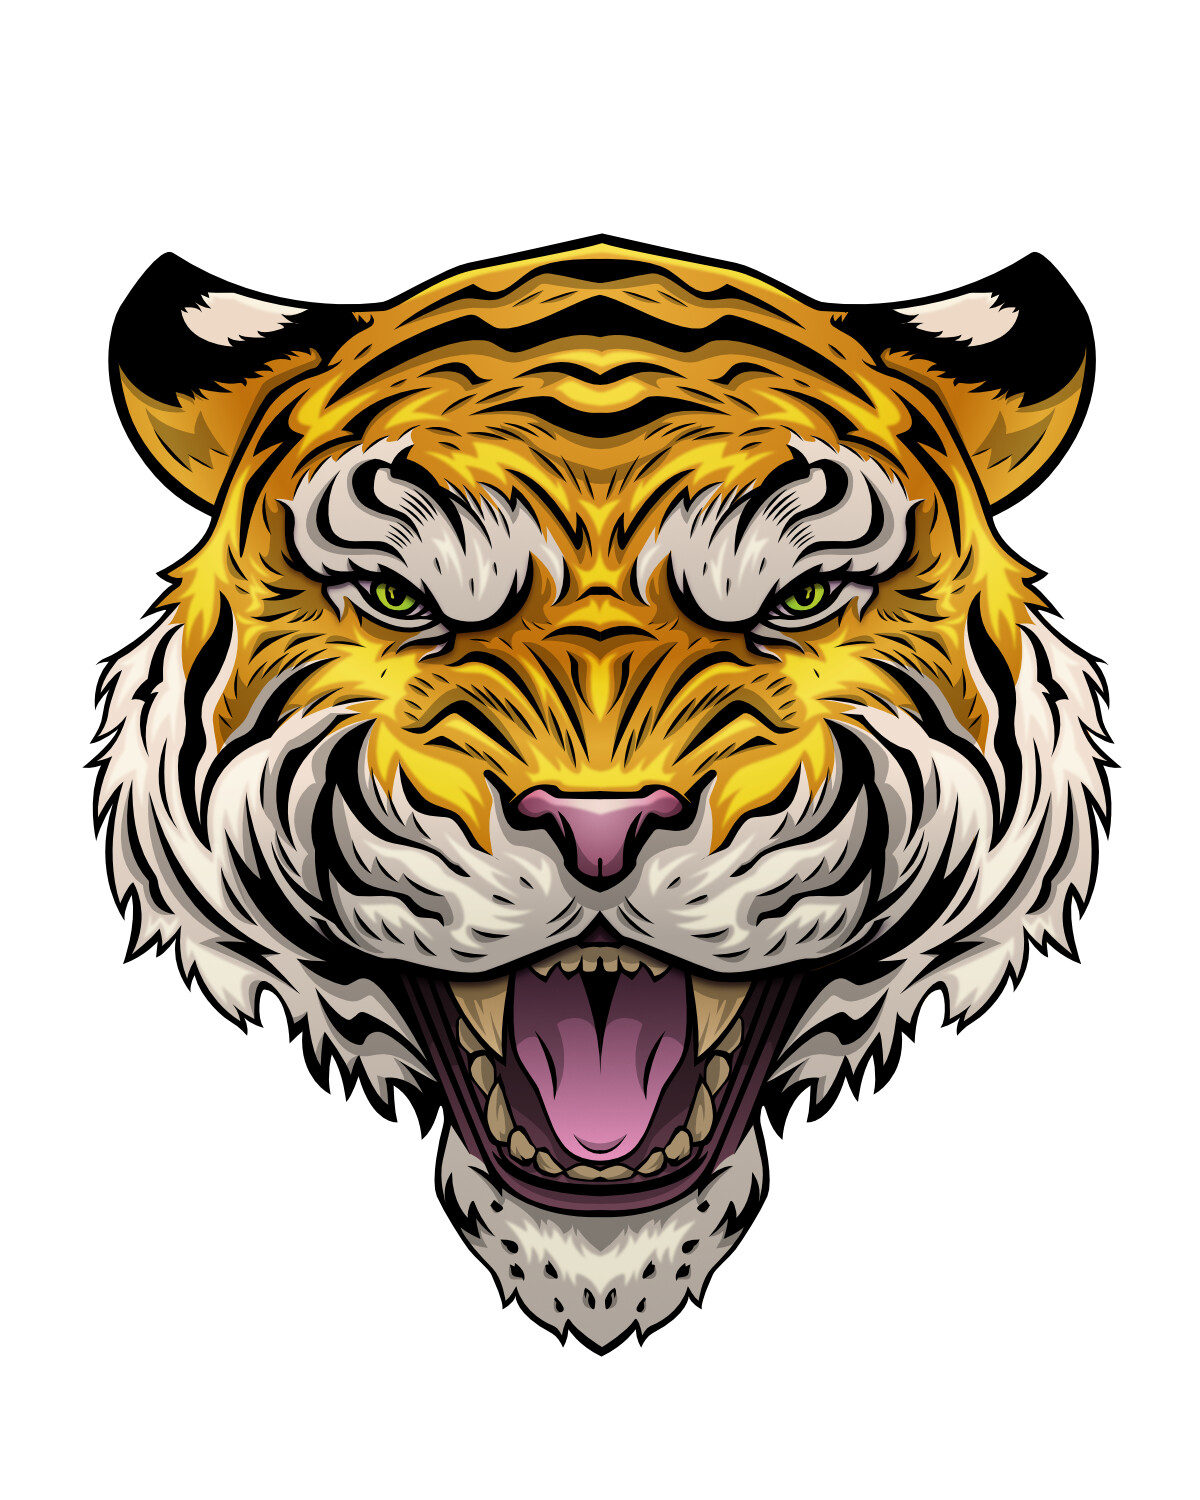 Tiger vector art for merchandise development. Done in Affinity Designer.